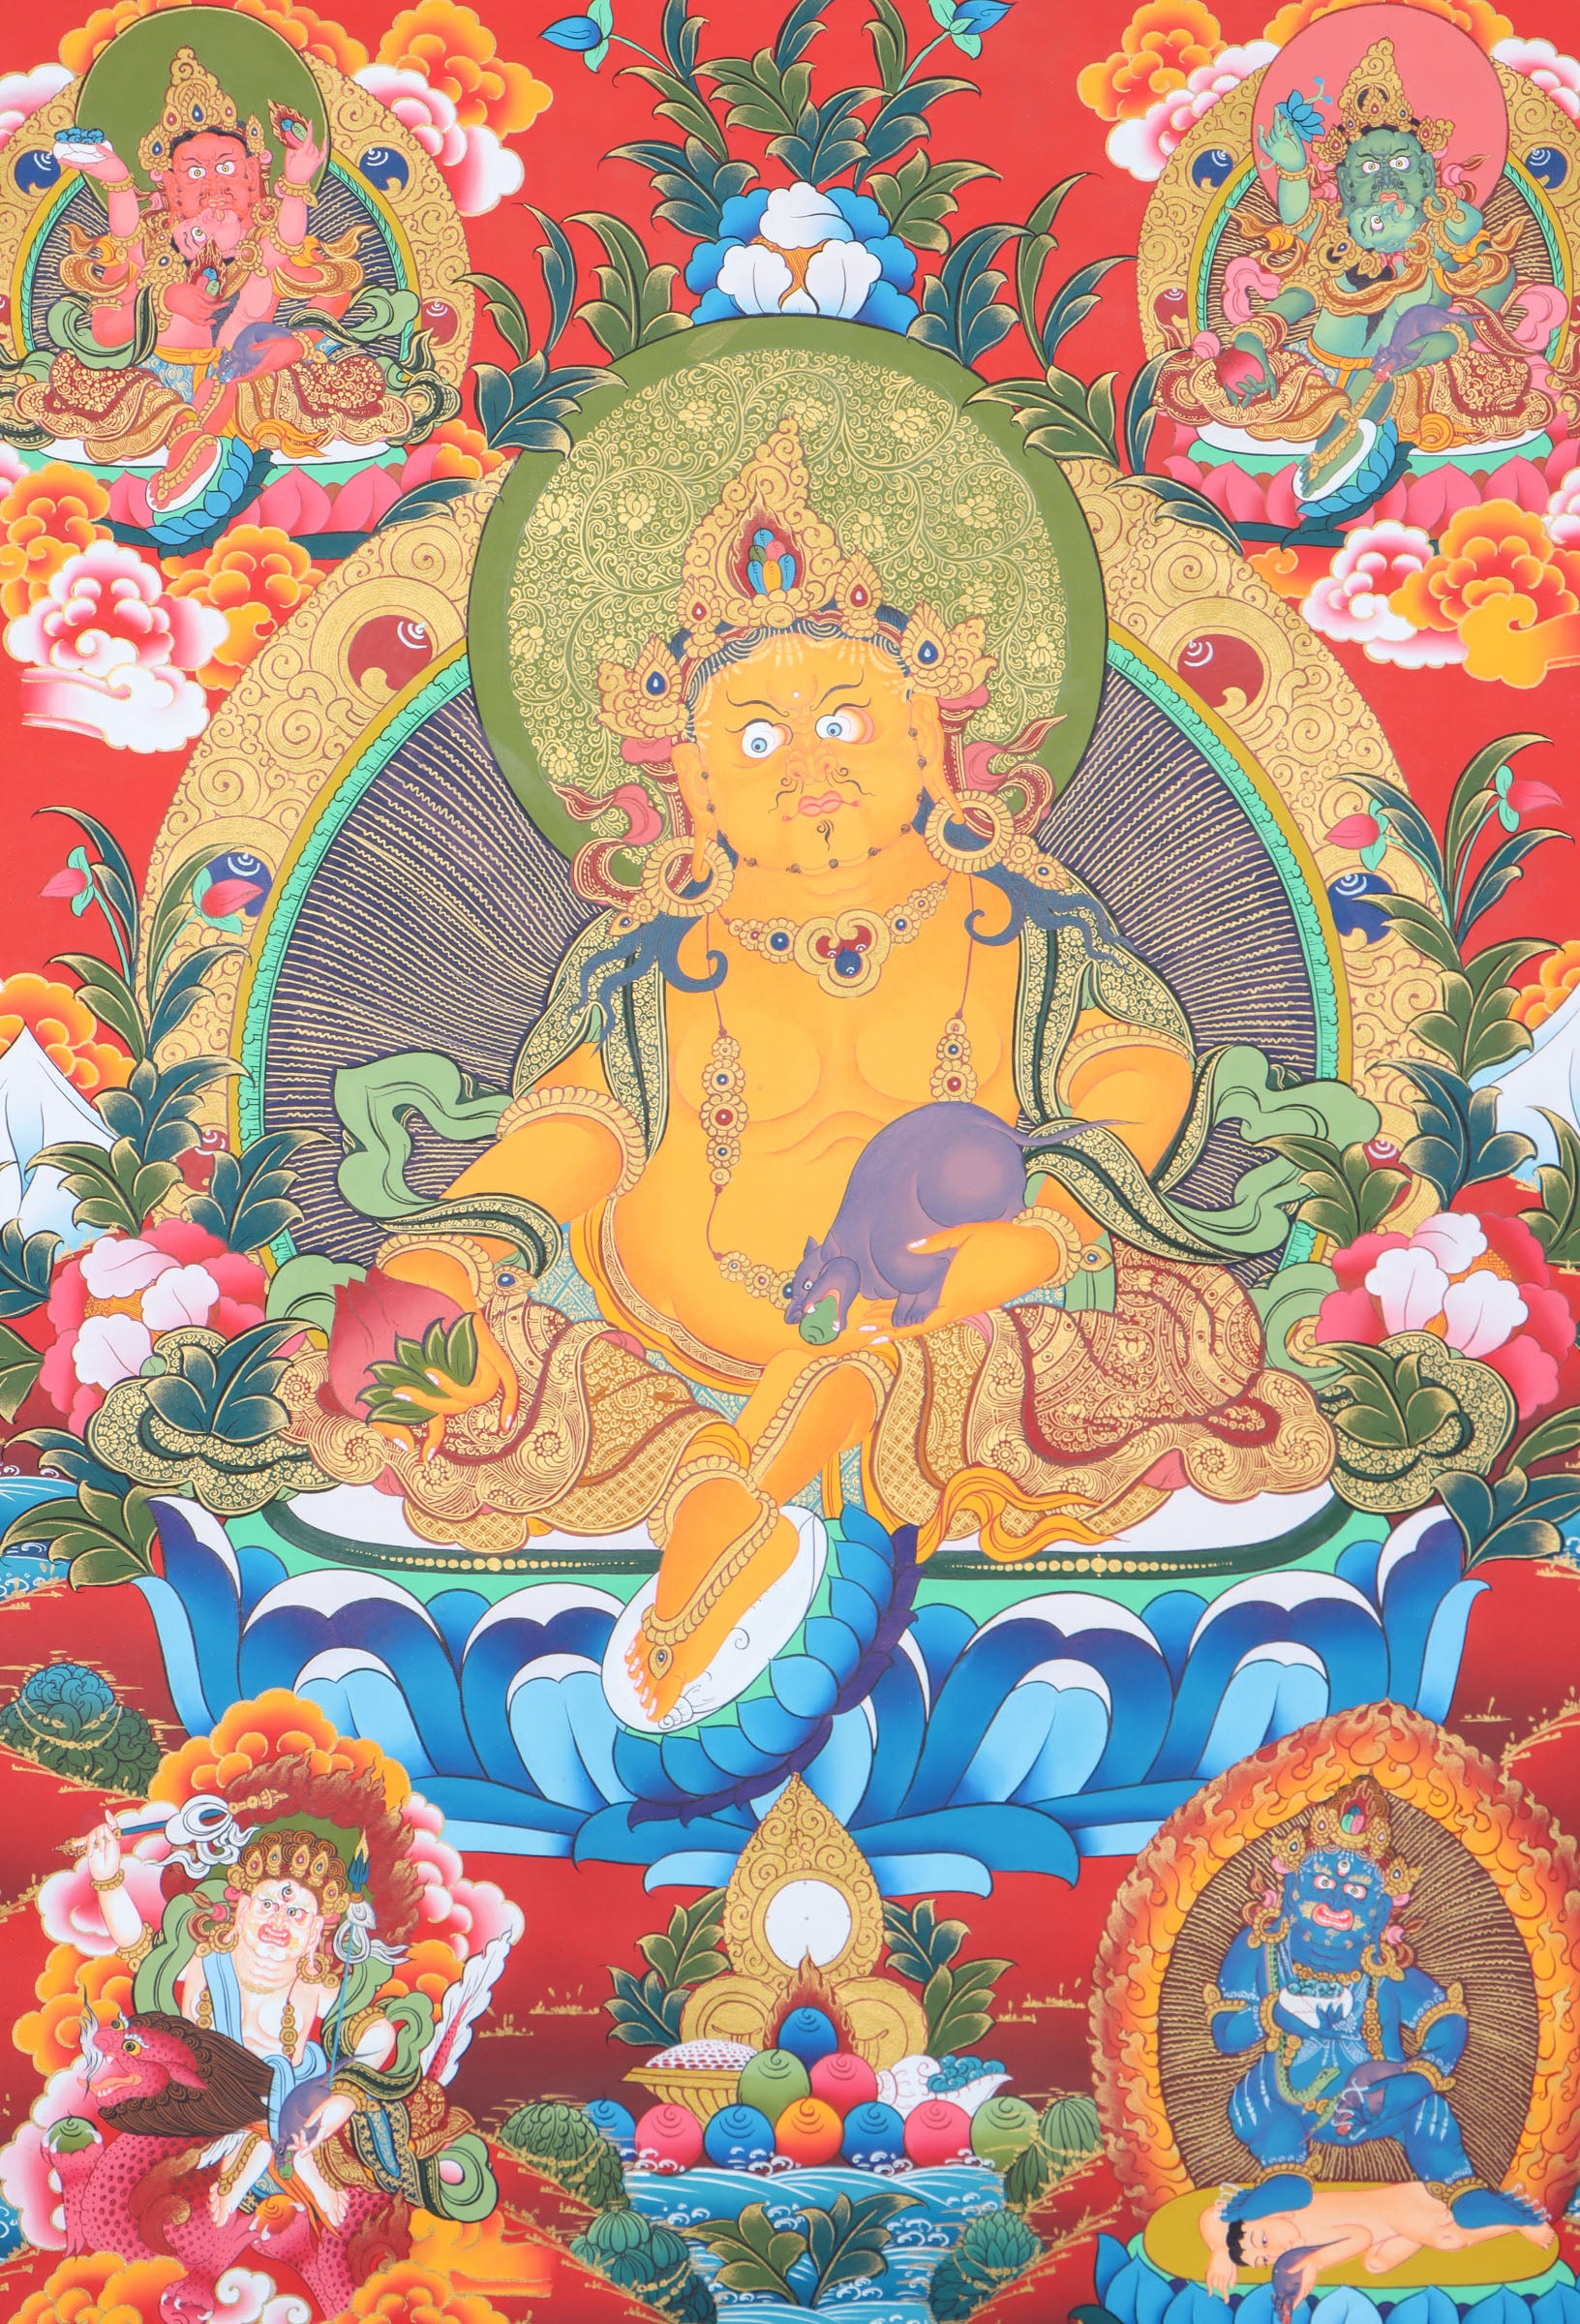 Pancha Kuber Thangka Painting for wealth and preposperity.